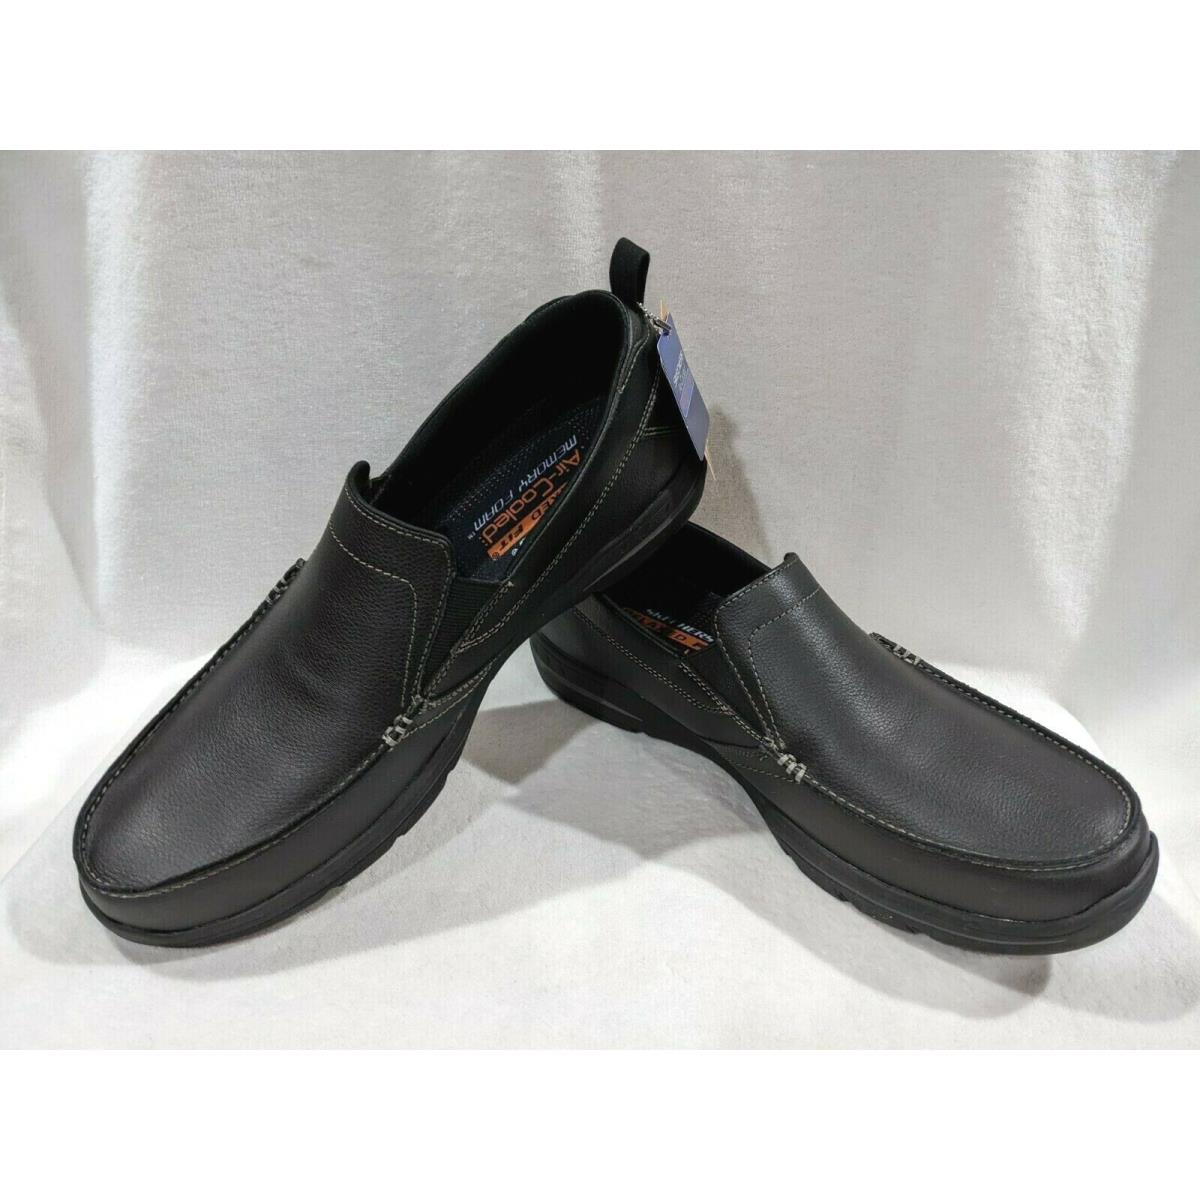 Skechers Men`s Relaxed Fit Harper Forde Black Slip-on Shoes - Size 9.5 64858